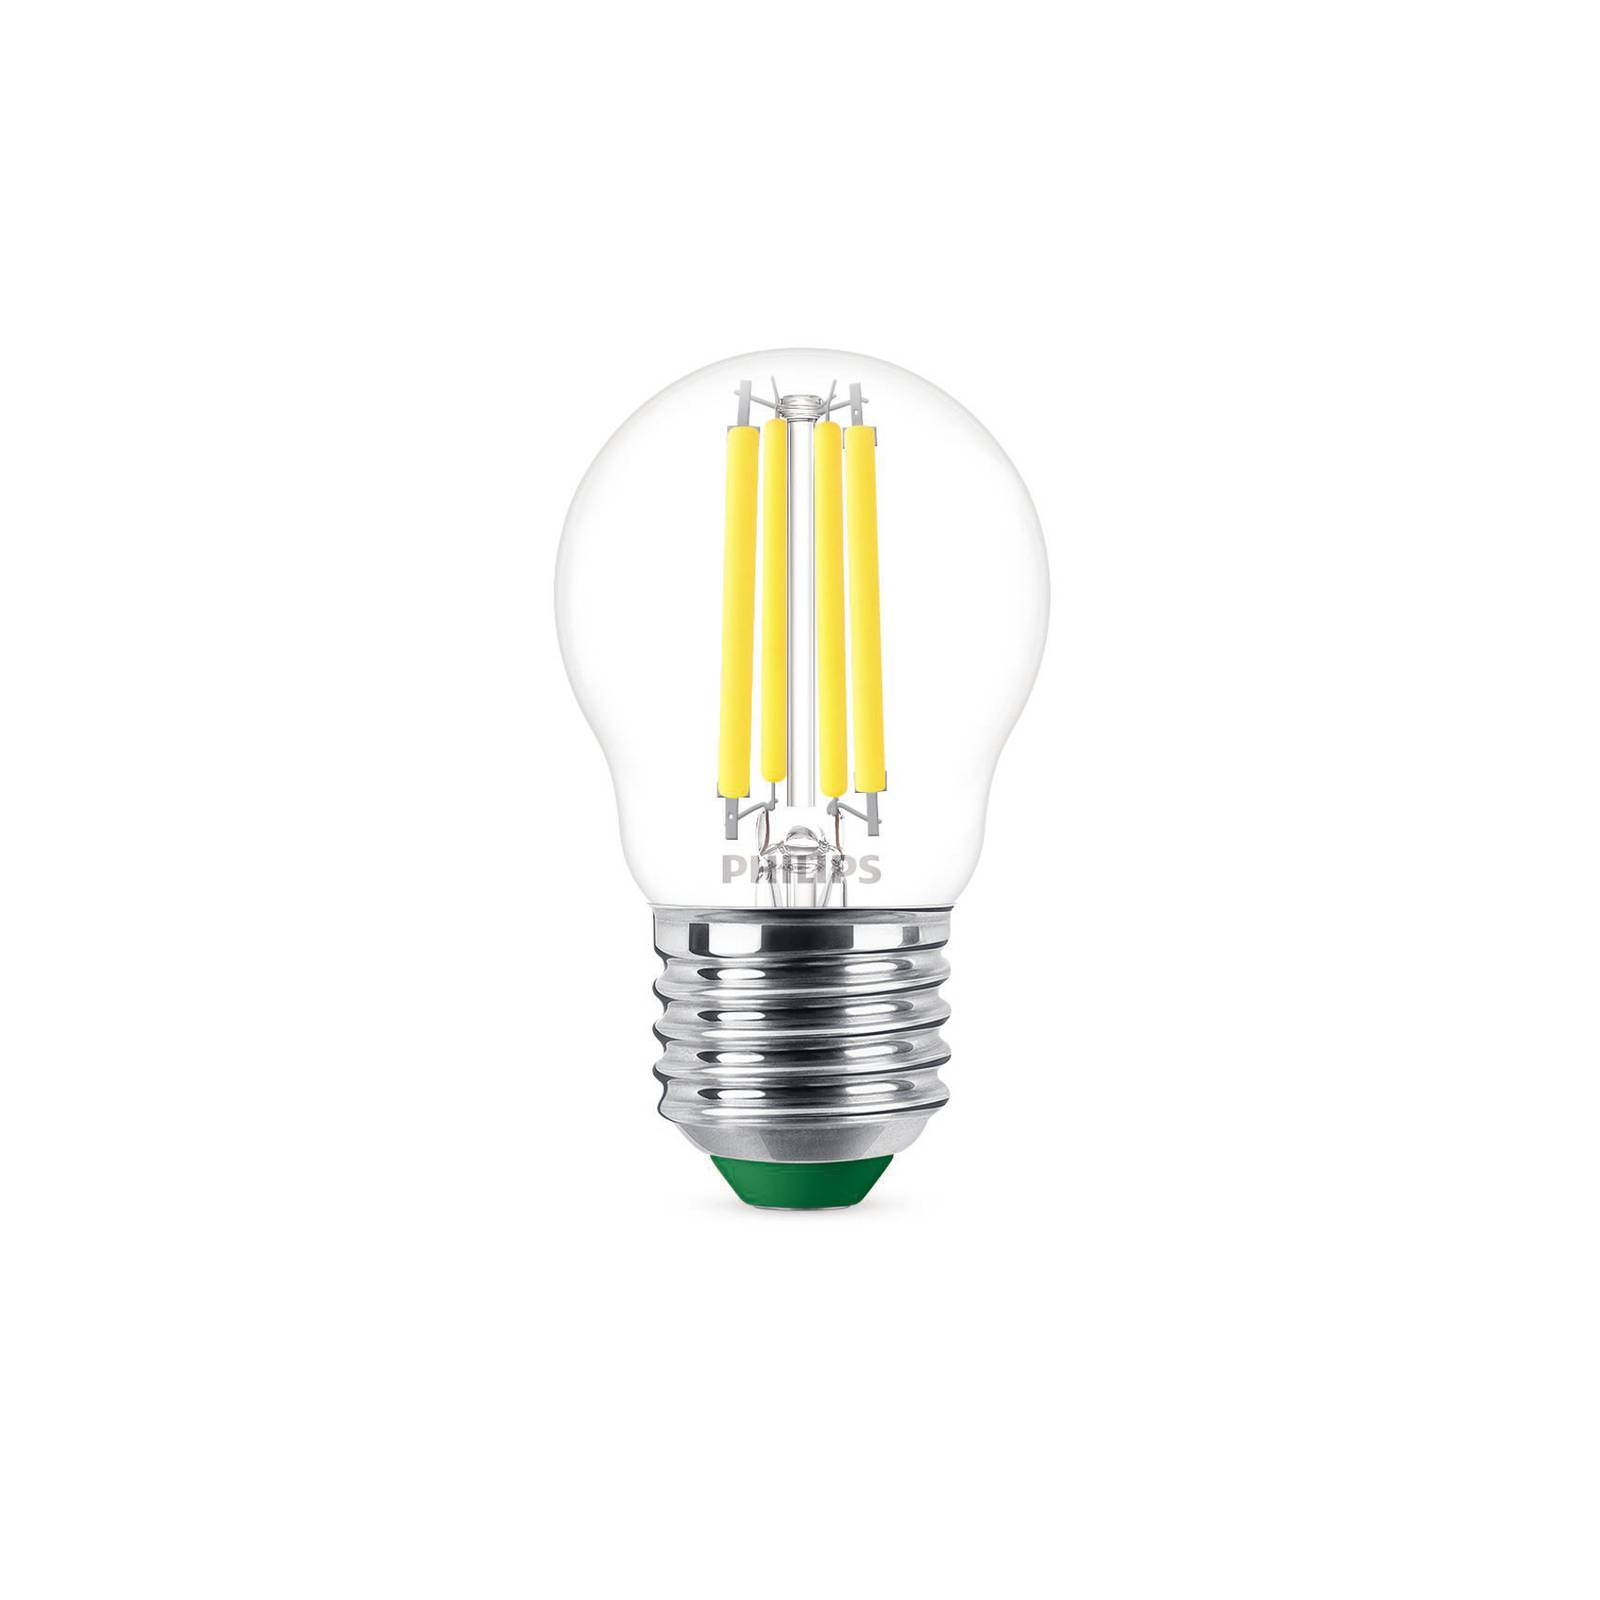 Philips E27 LED-Lampe G45 2,3W 485lm 4.000K klar